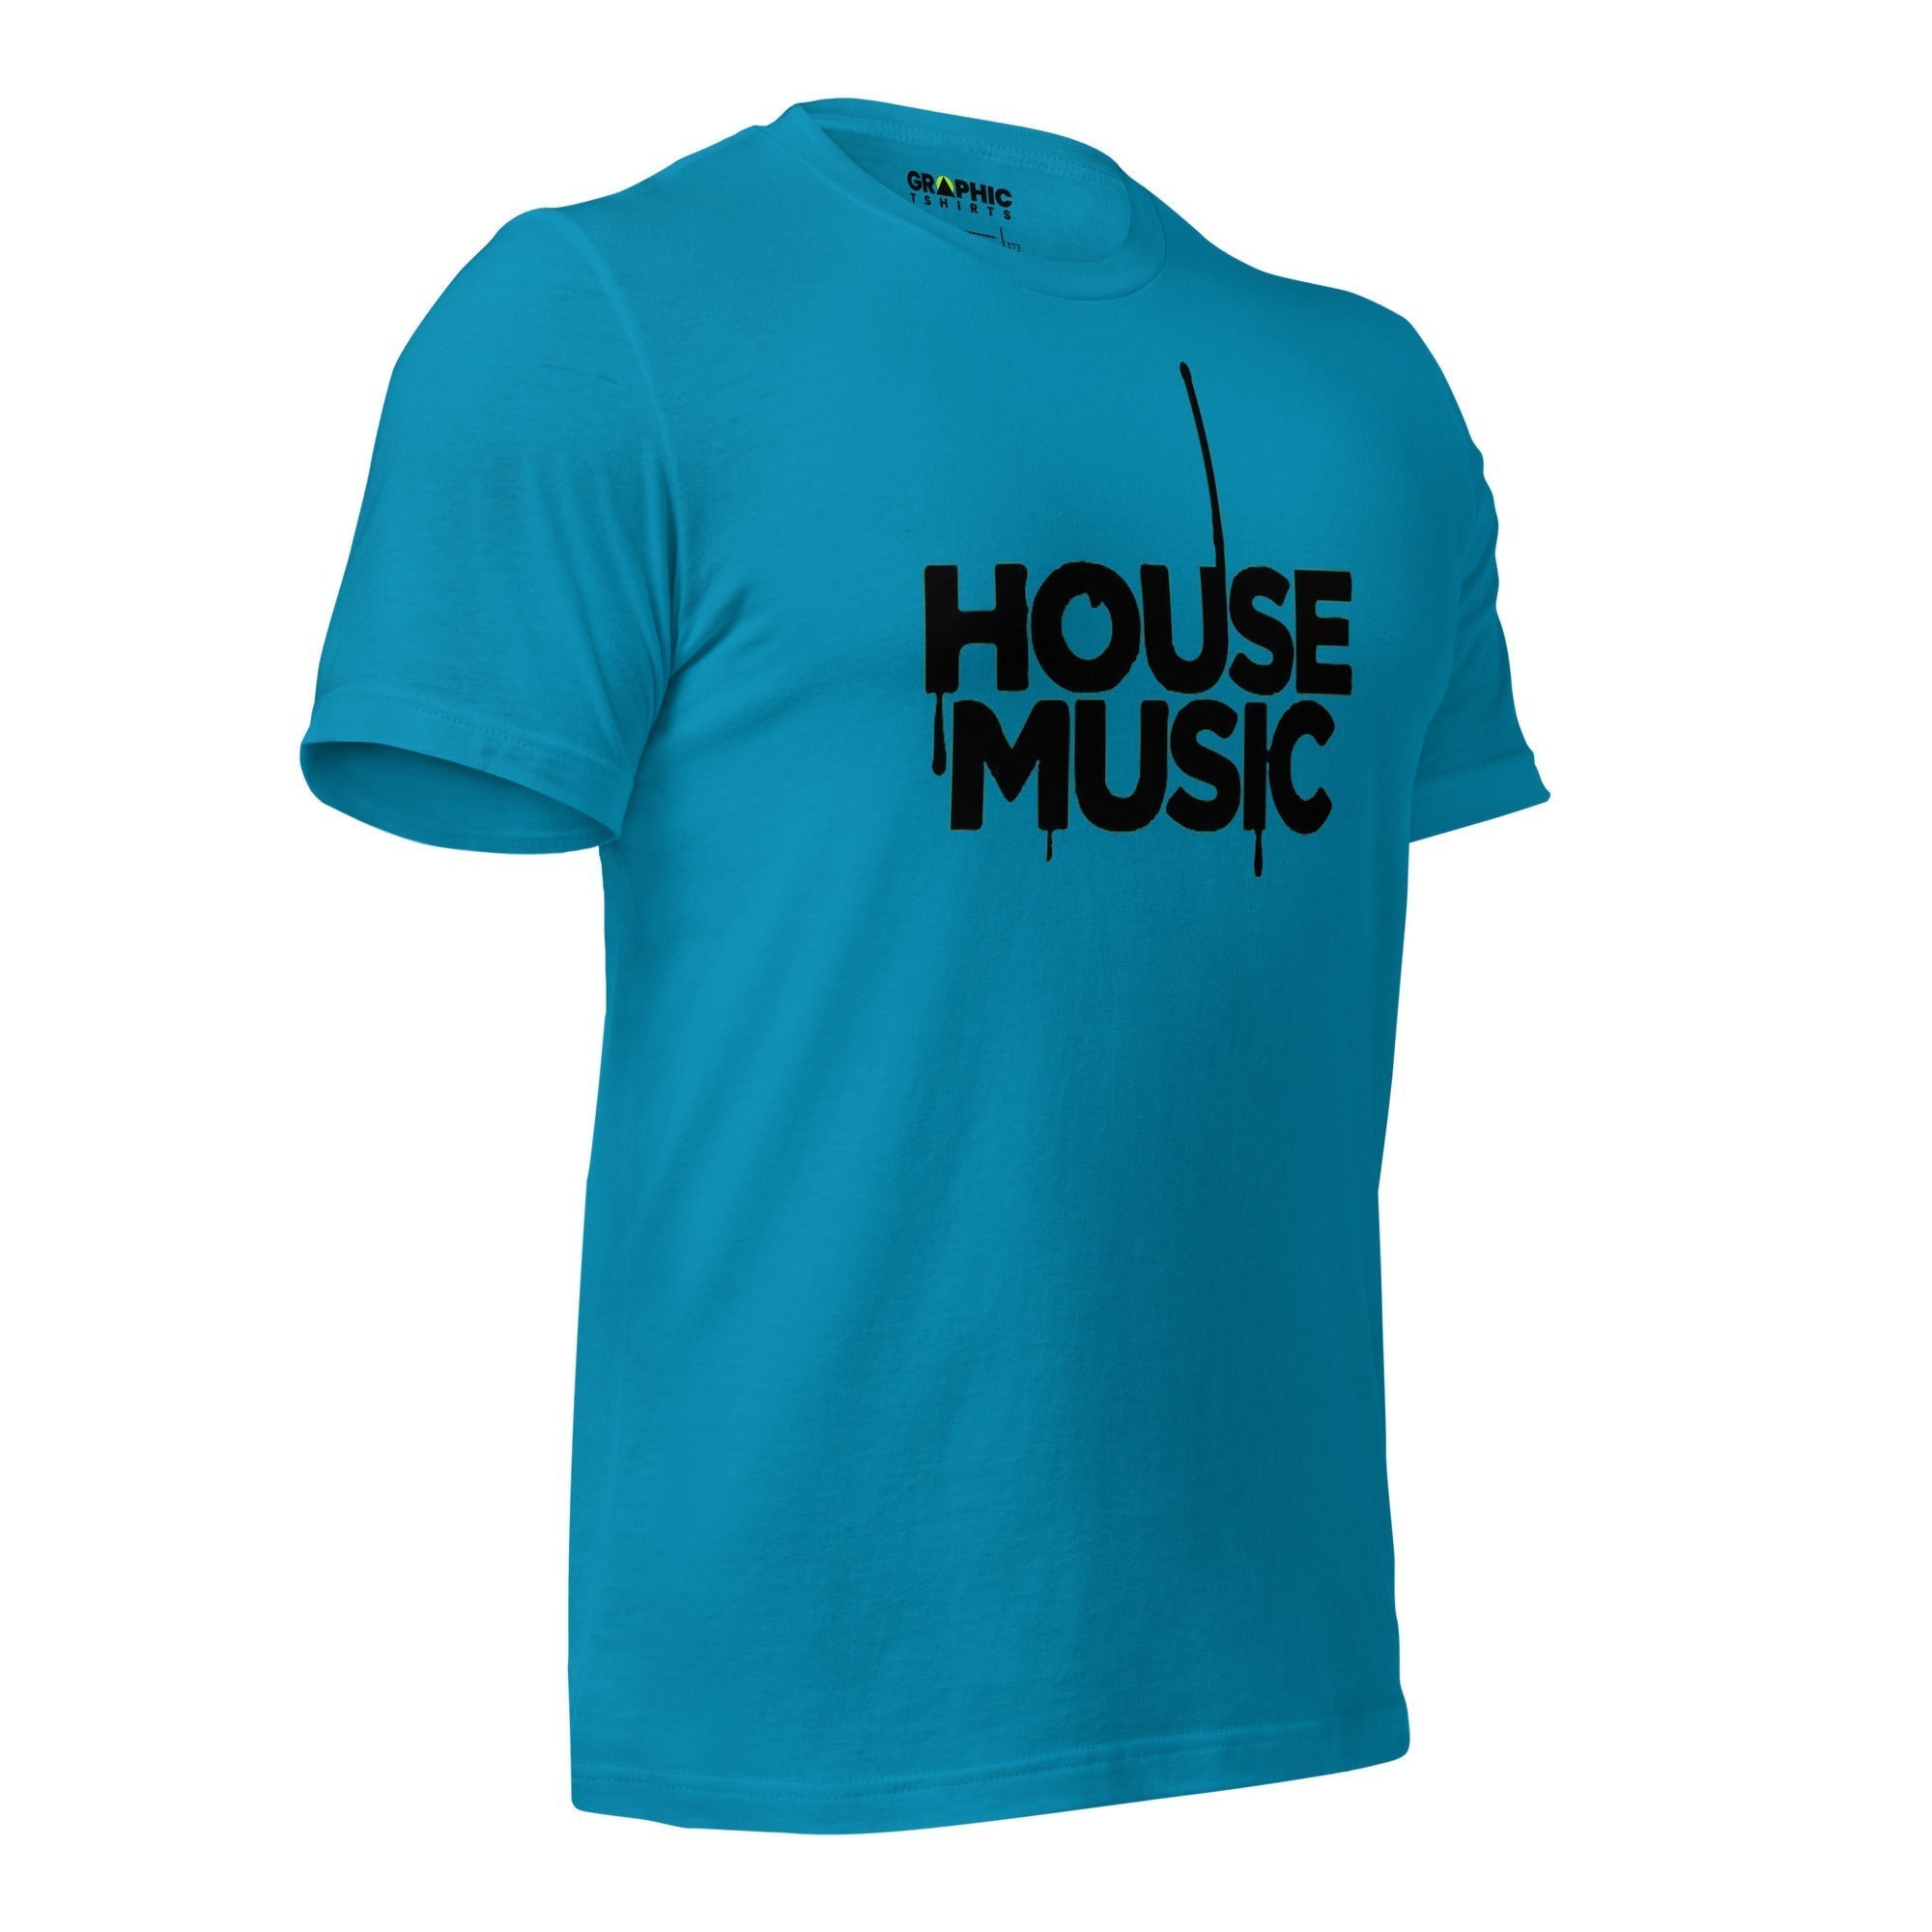 Unisex Crew Neck T-Shirt - House Music - GRAPHIC T-SHIRTS